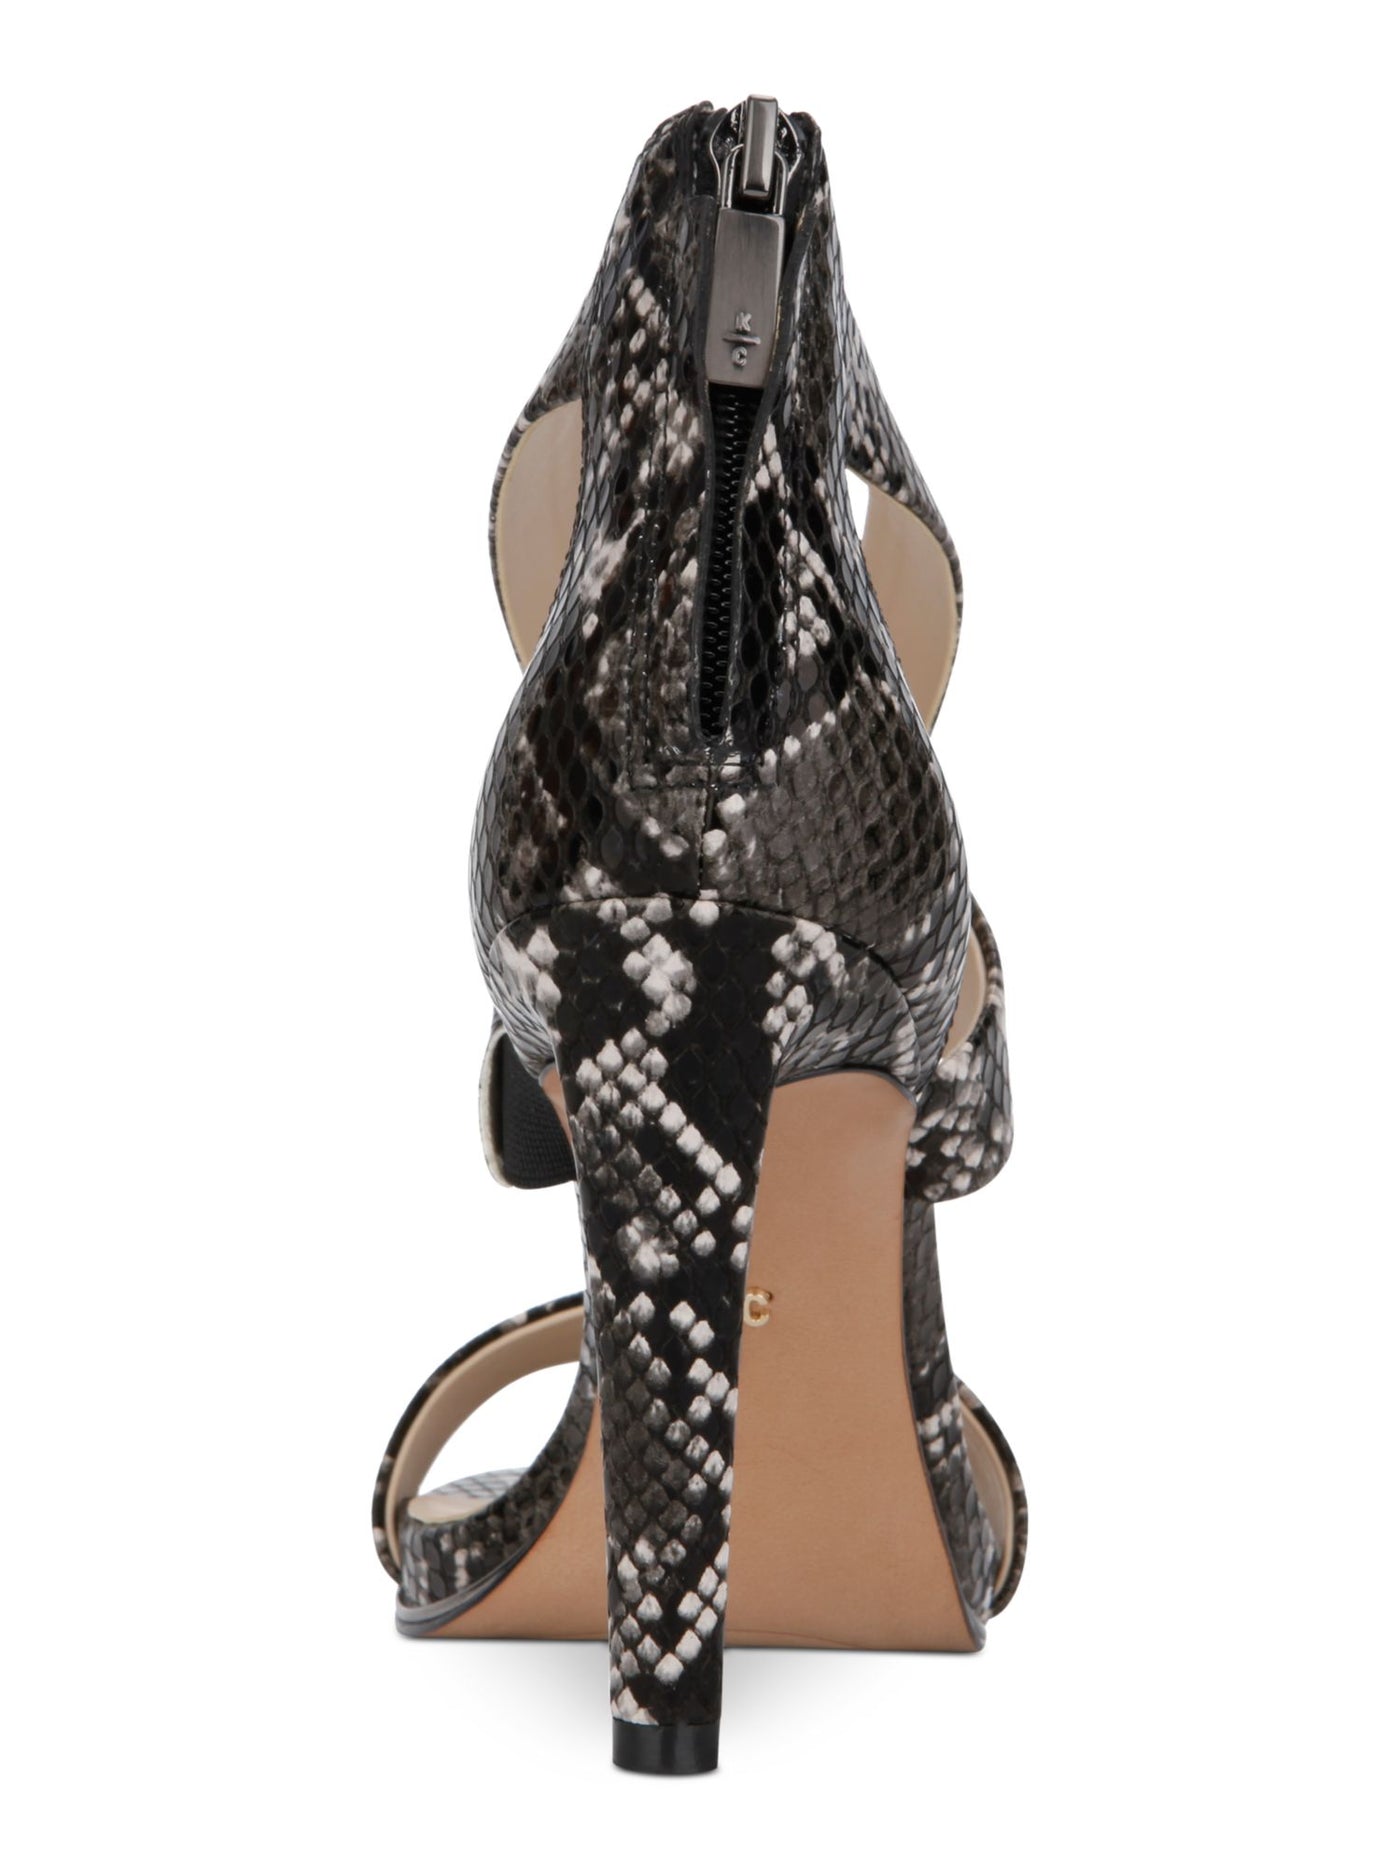 KENNETH COLE Womens Gray Snake Print Crisscross Straps Brooke Cross Almond Toe Stiletto Zip-Up Dress Sandals Shoes 9